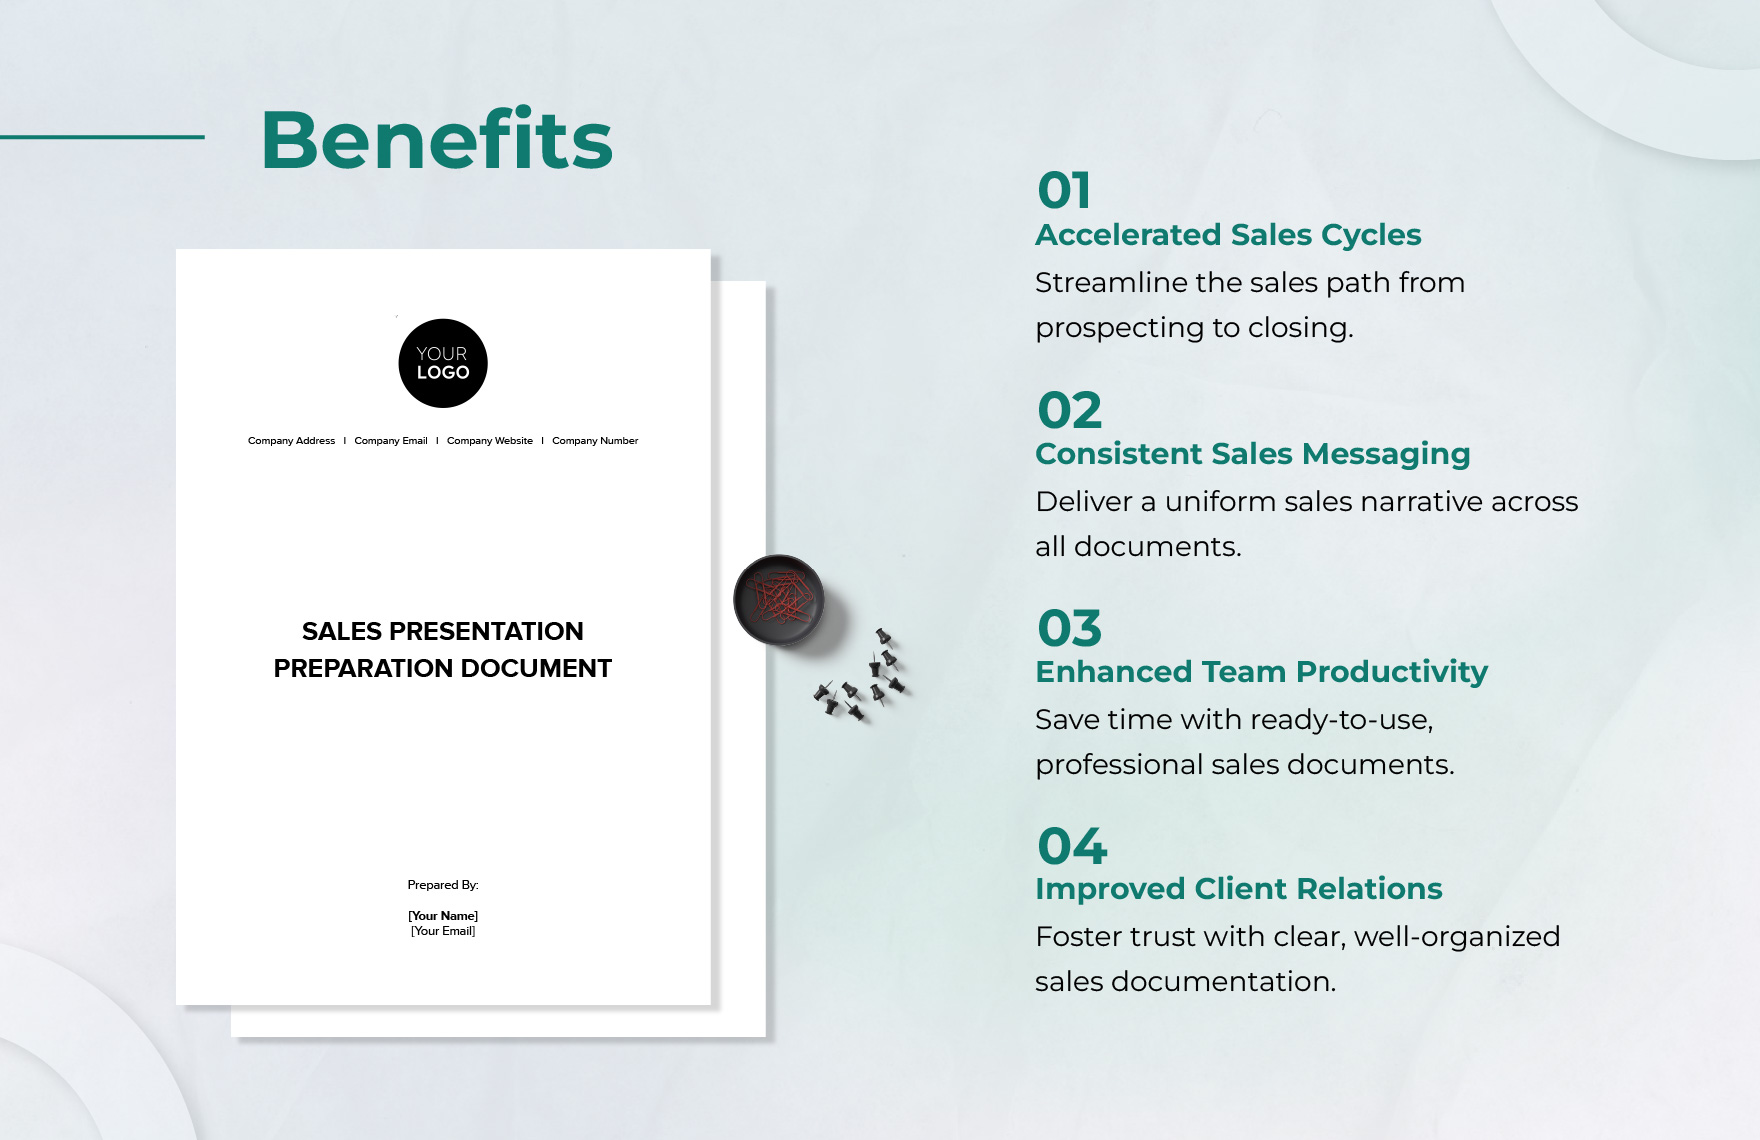 Sales Presentation Preparation Document Template